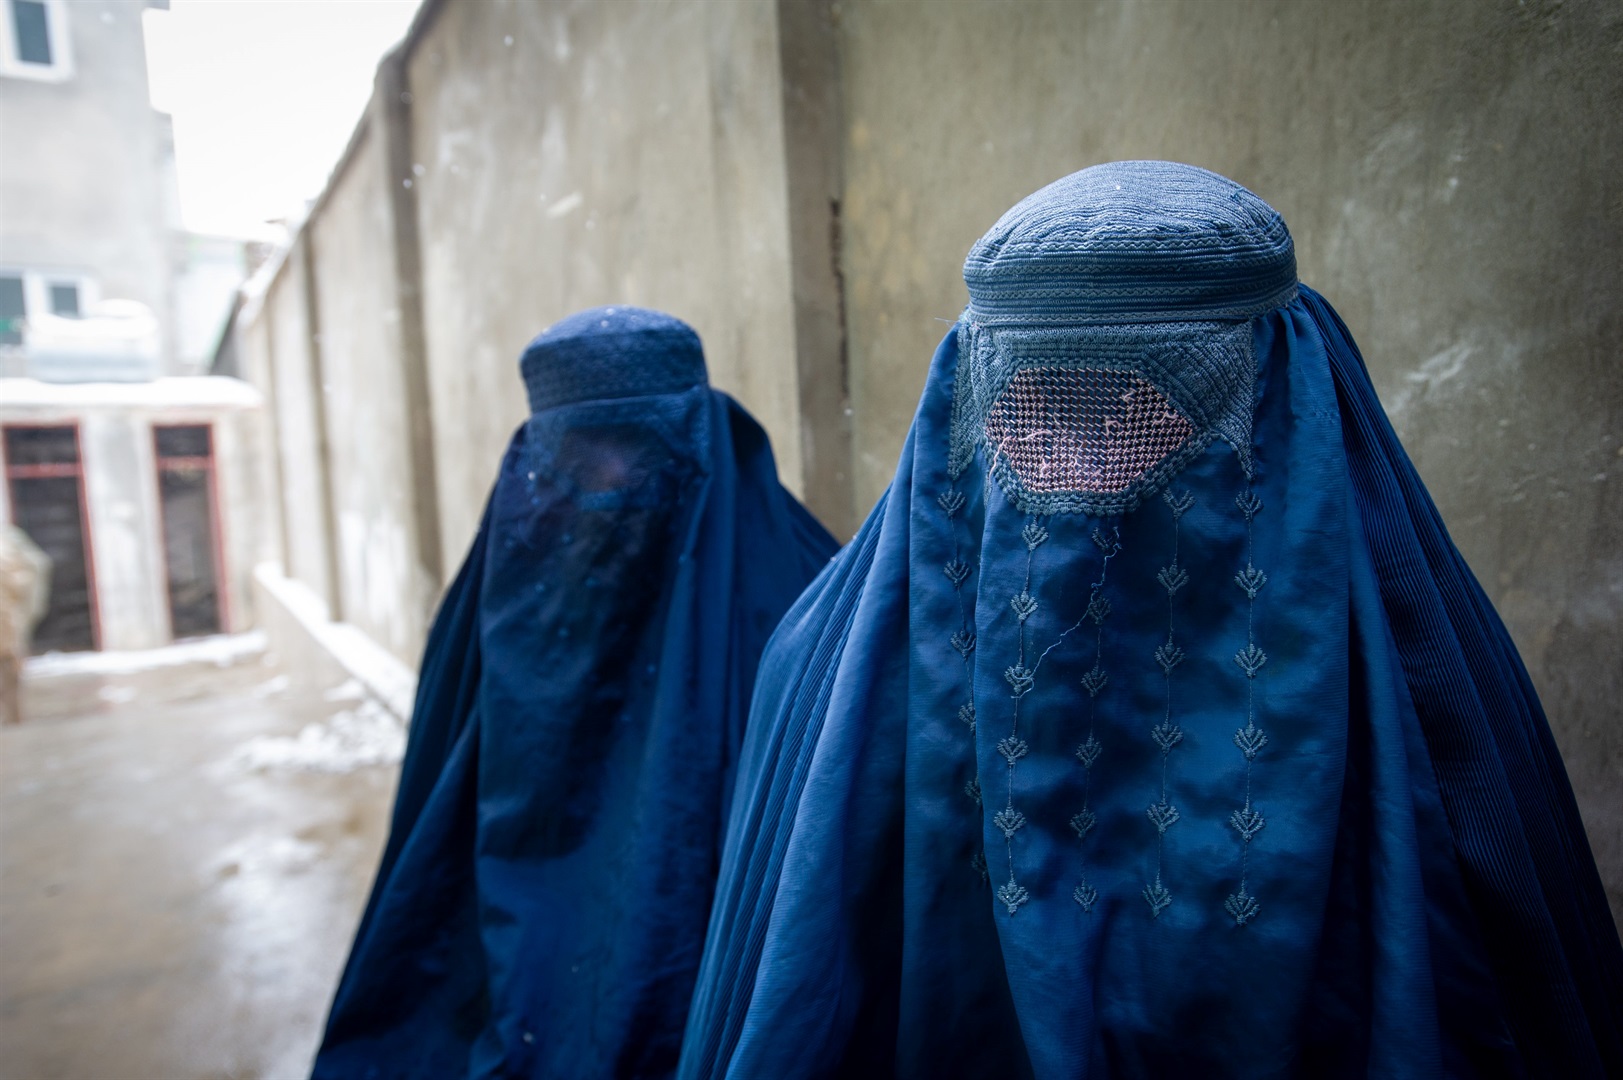 Two women wearing burqas in Afghanistan.